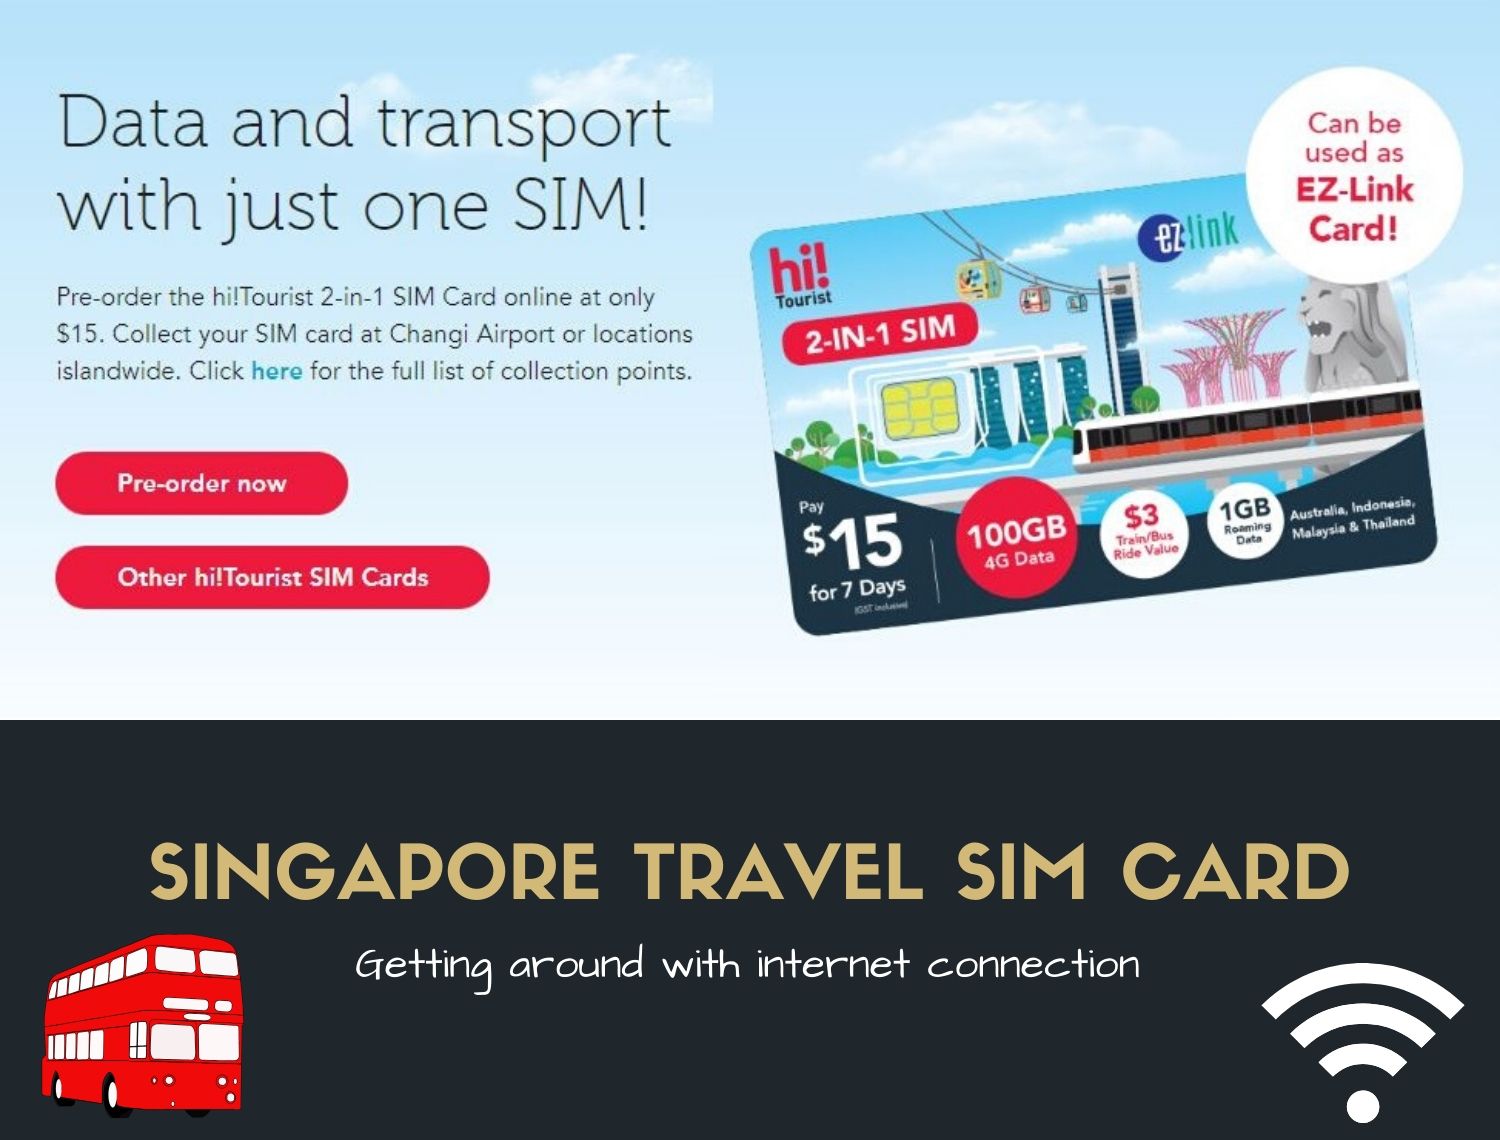 travel card to singapore